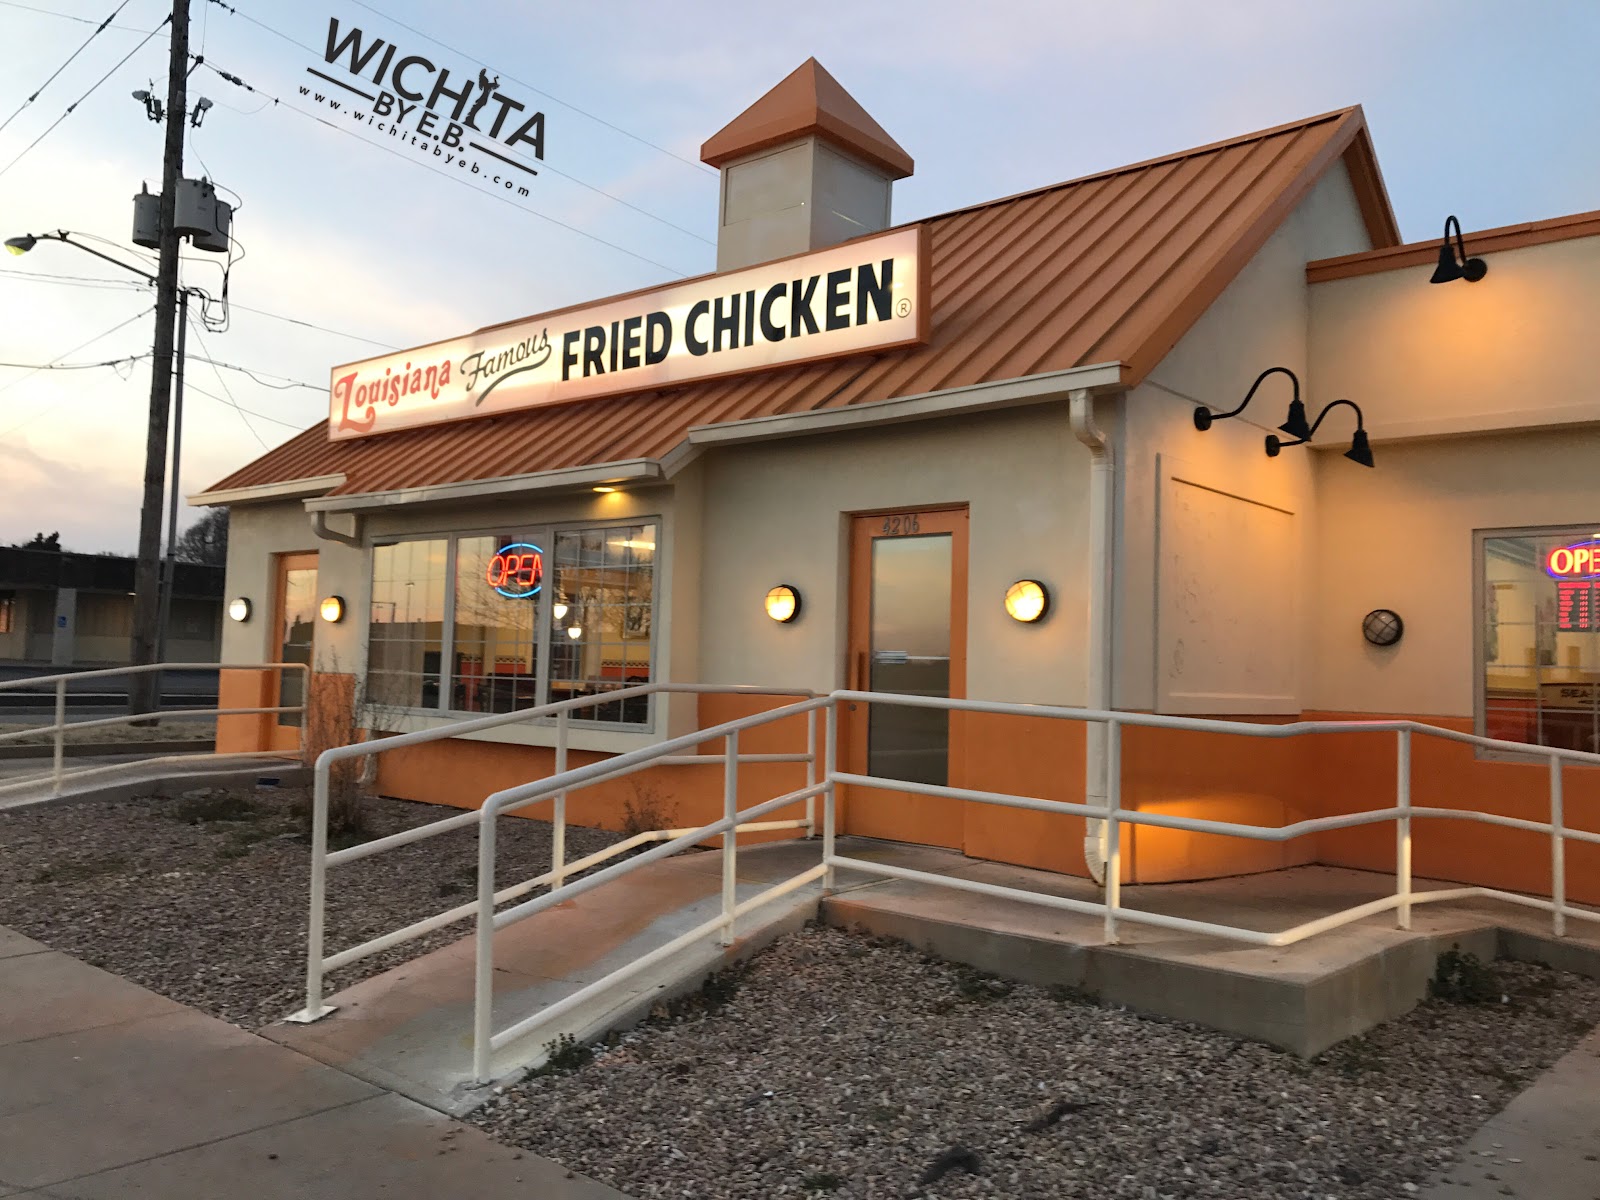 Louisiana Famous Fried Chicken Review – Wichita By E.B.